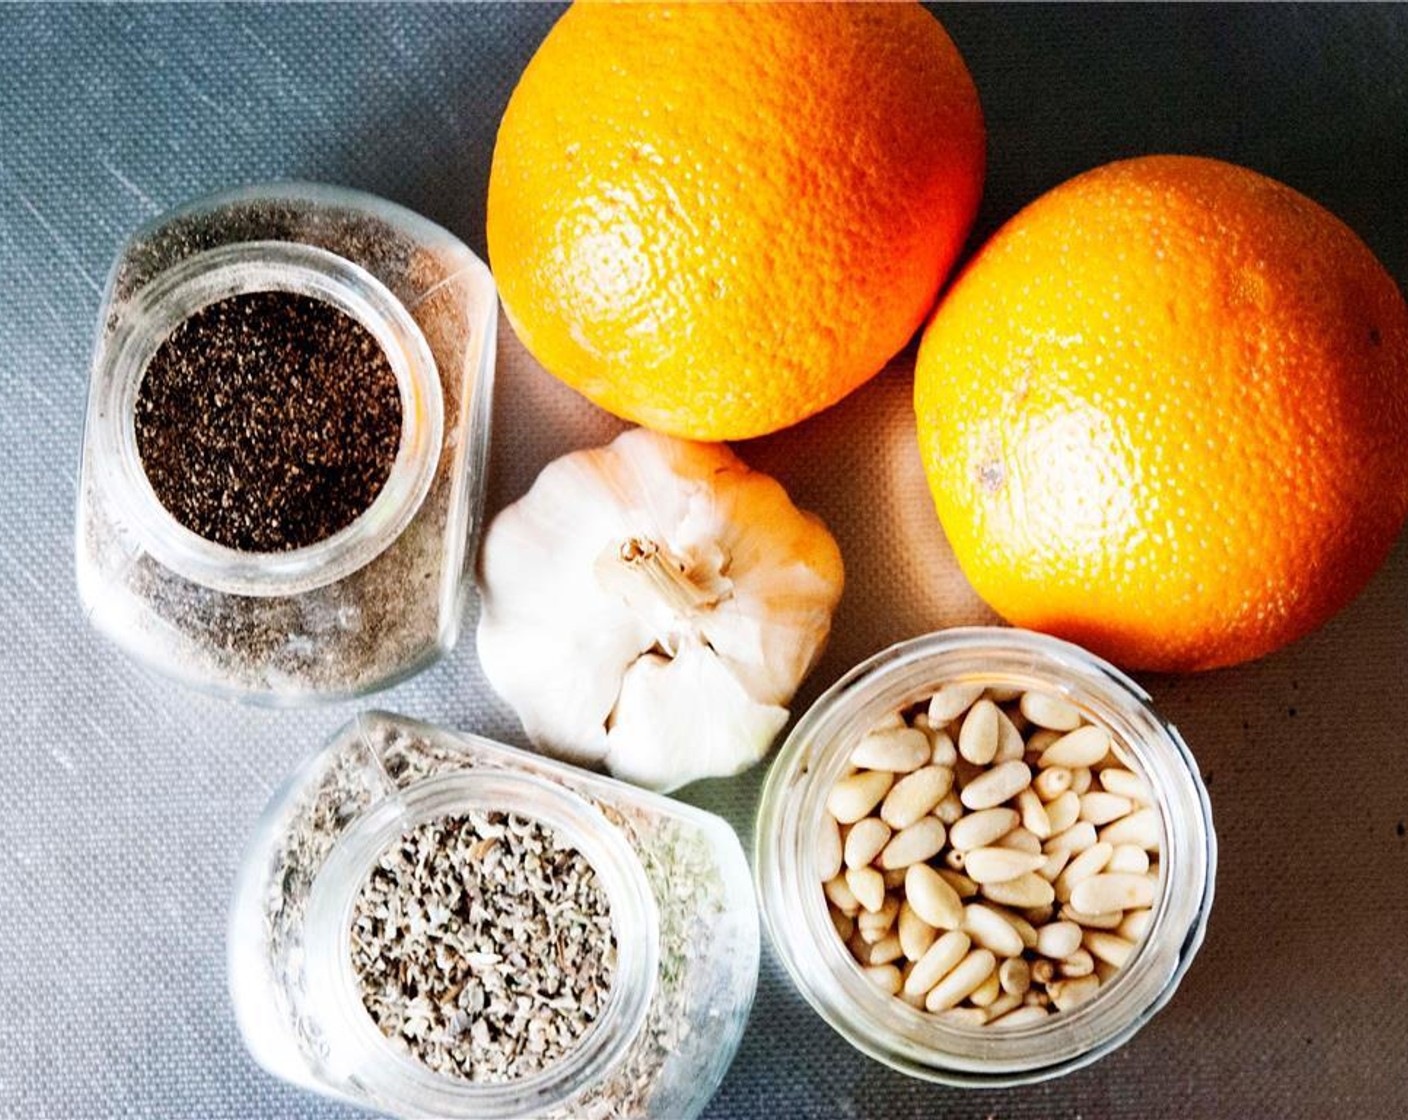 step 2 Grab the ingredients for the rub: Oranges (2), Garlic (1 clove), Pine Nuts (2 Tbsp), Seasoned Salt (1 Tbsp), and Fresh Oregano (1 tsp).